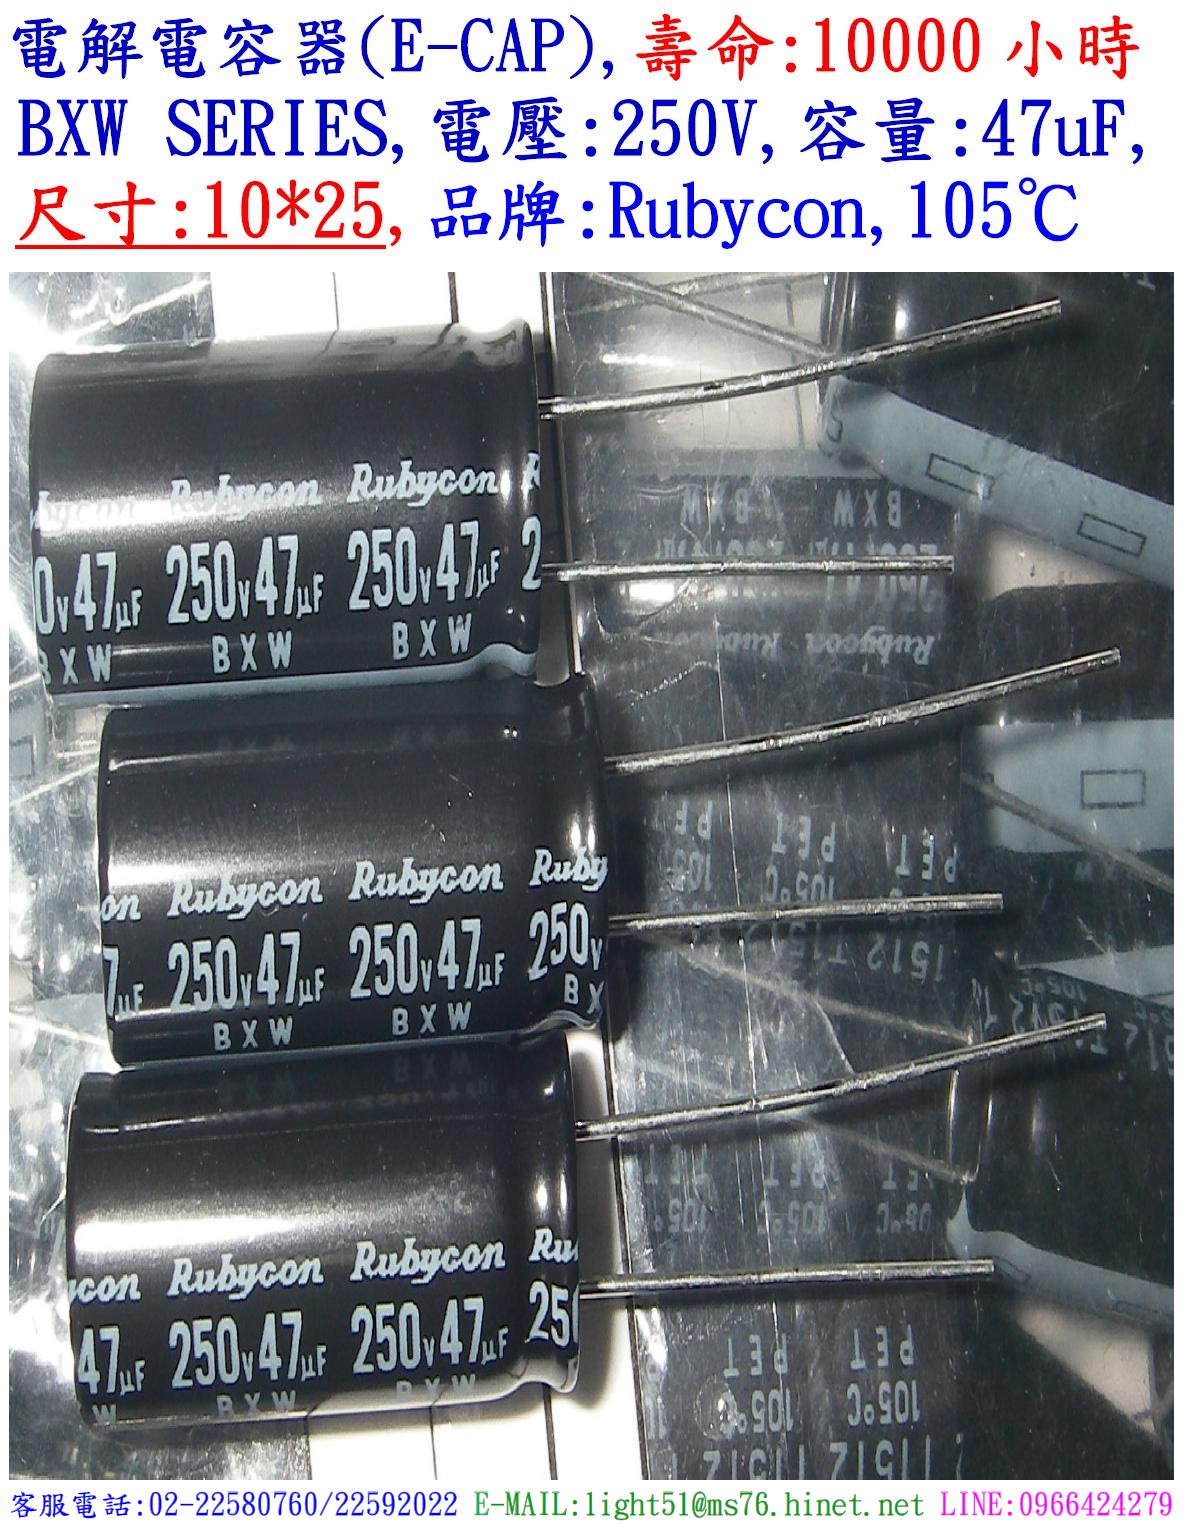 BXW,250V,47uF,尺寸:10*25,電解電容器,壽命:10000小時,Rubycon